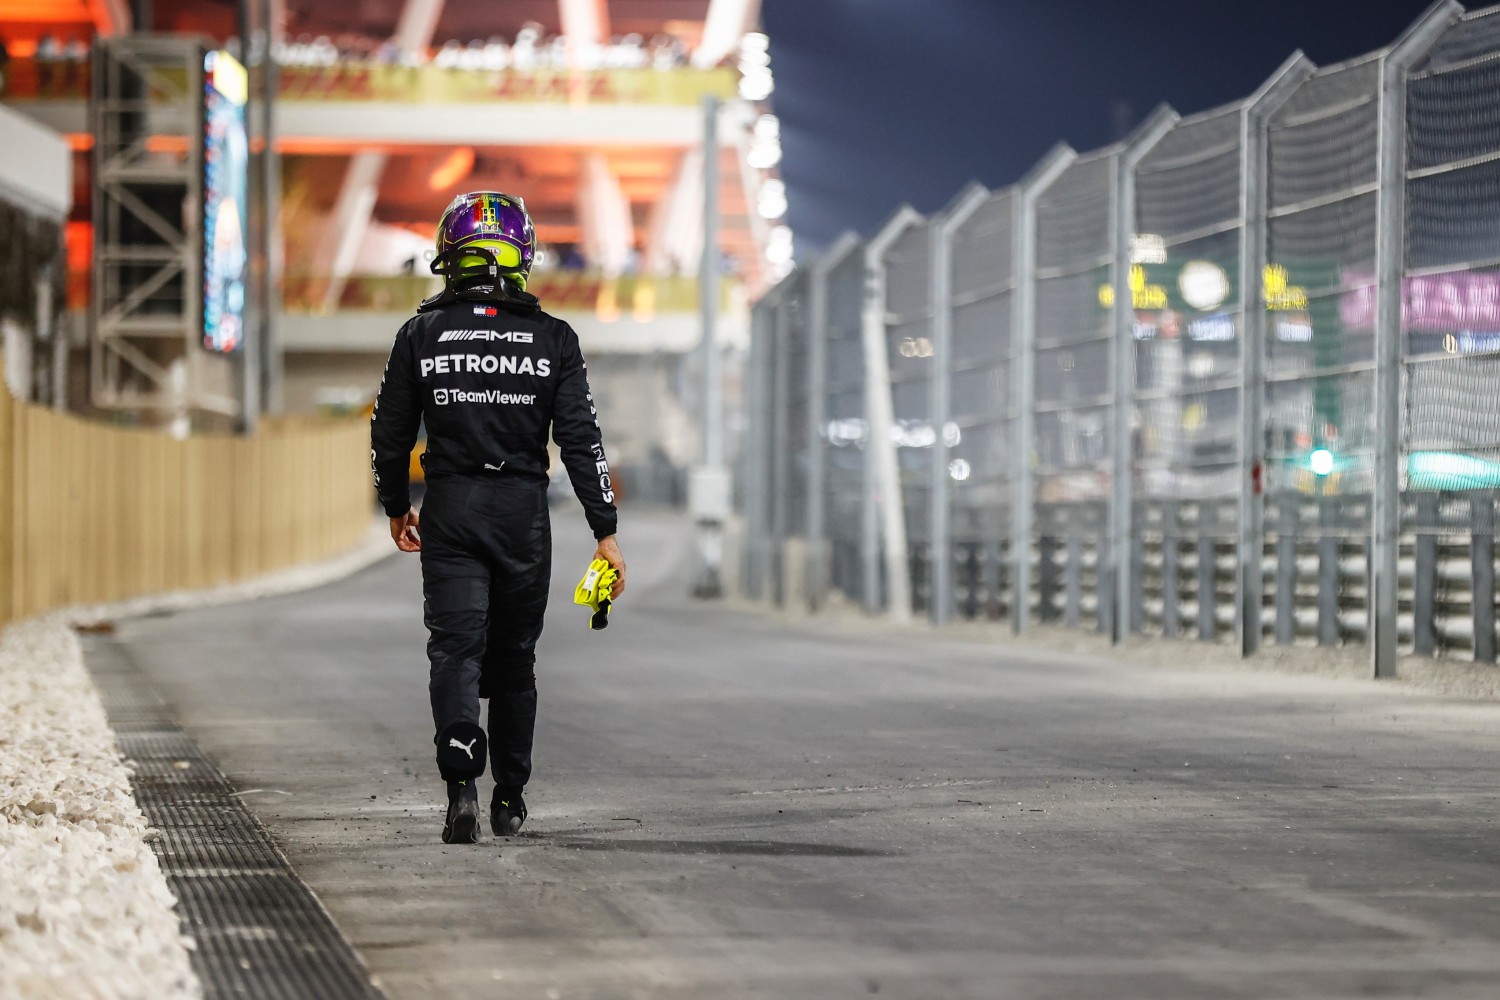 Lewis Hamilton Walks back to the pits